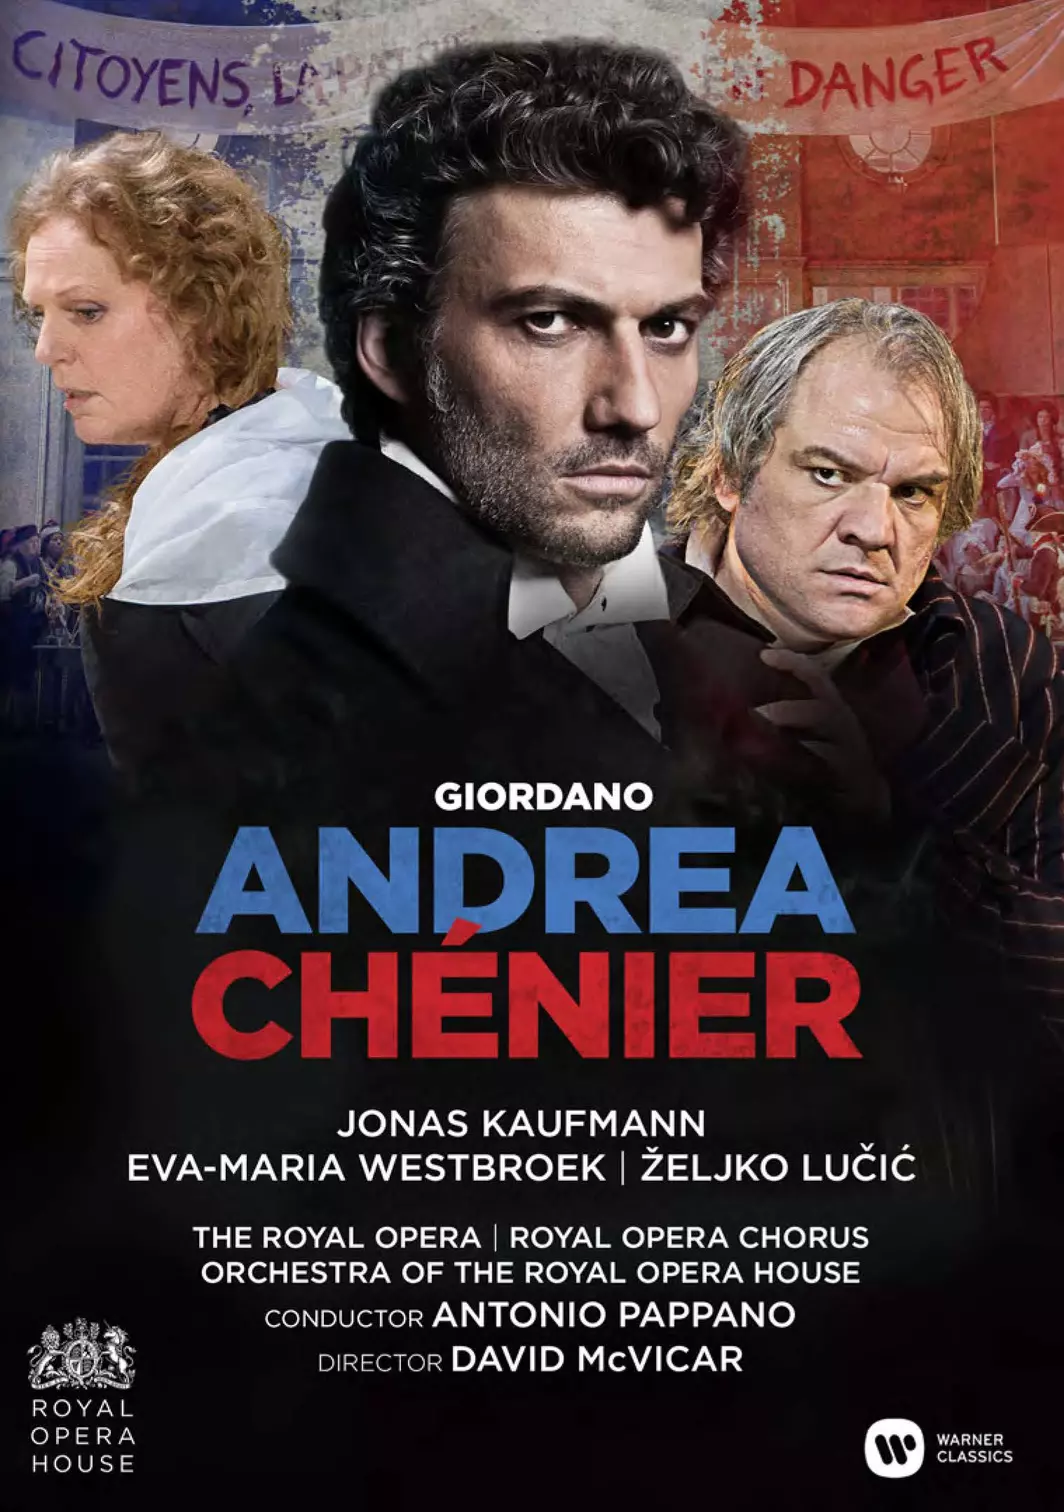 Giordano: Andrea Chenier [The Royal Opera]